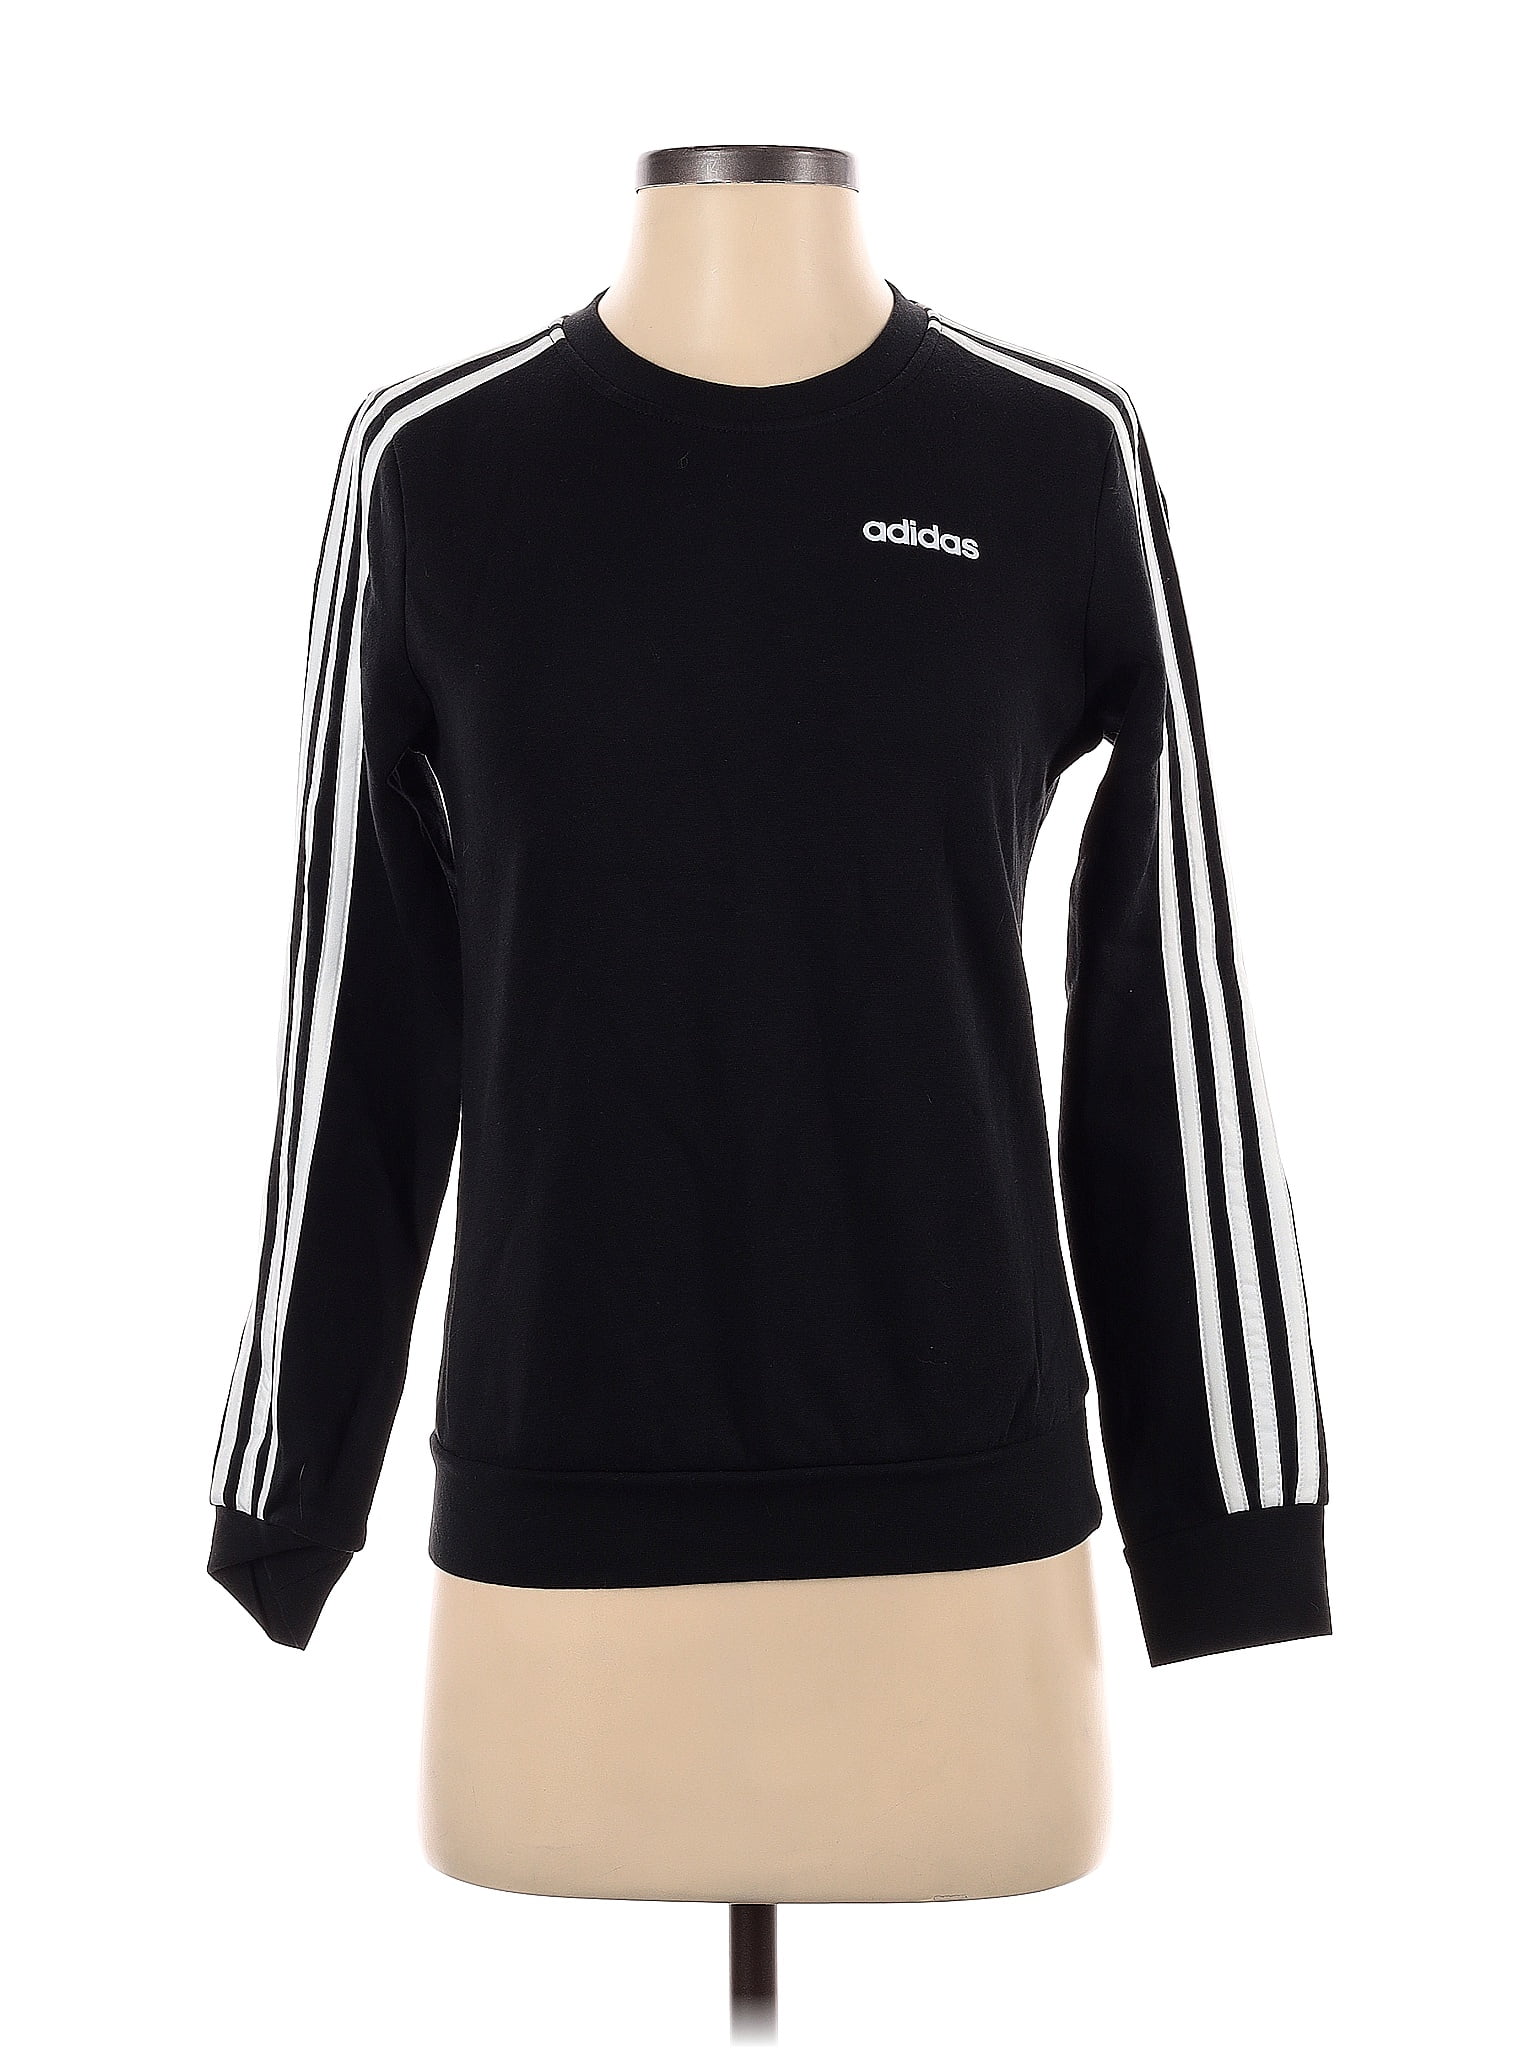 Adidas Black Sweatshirt Size XS - 67% off | thredUP